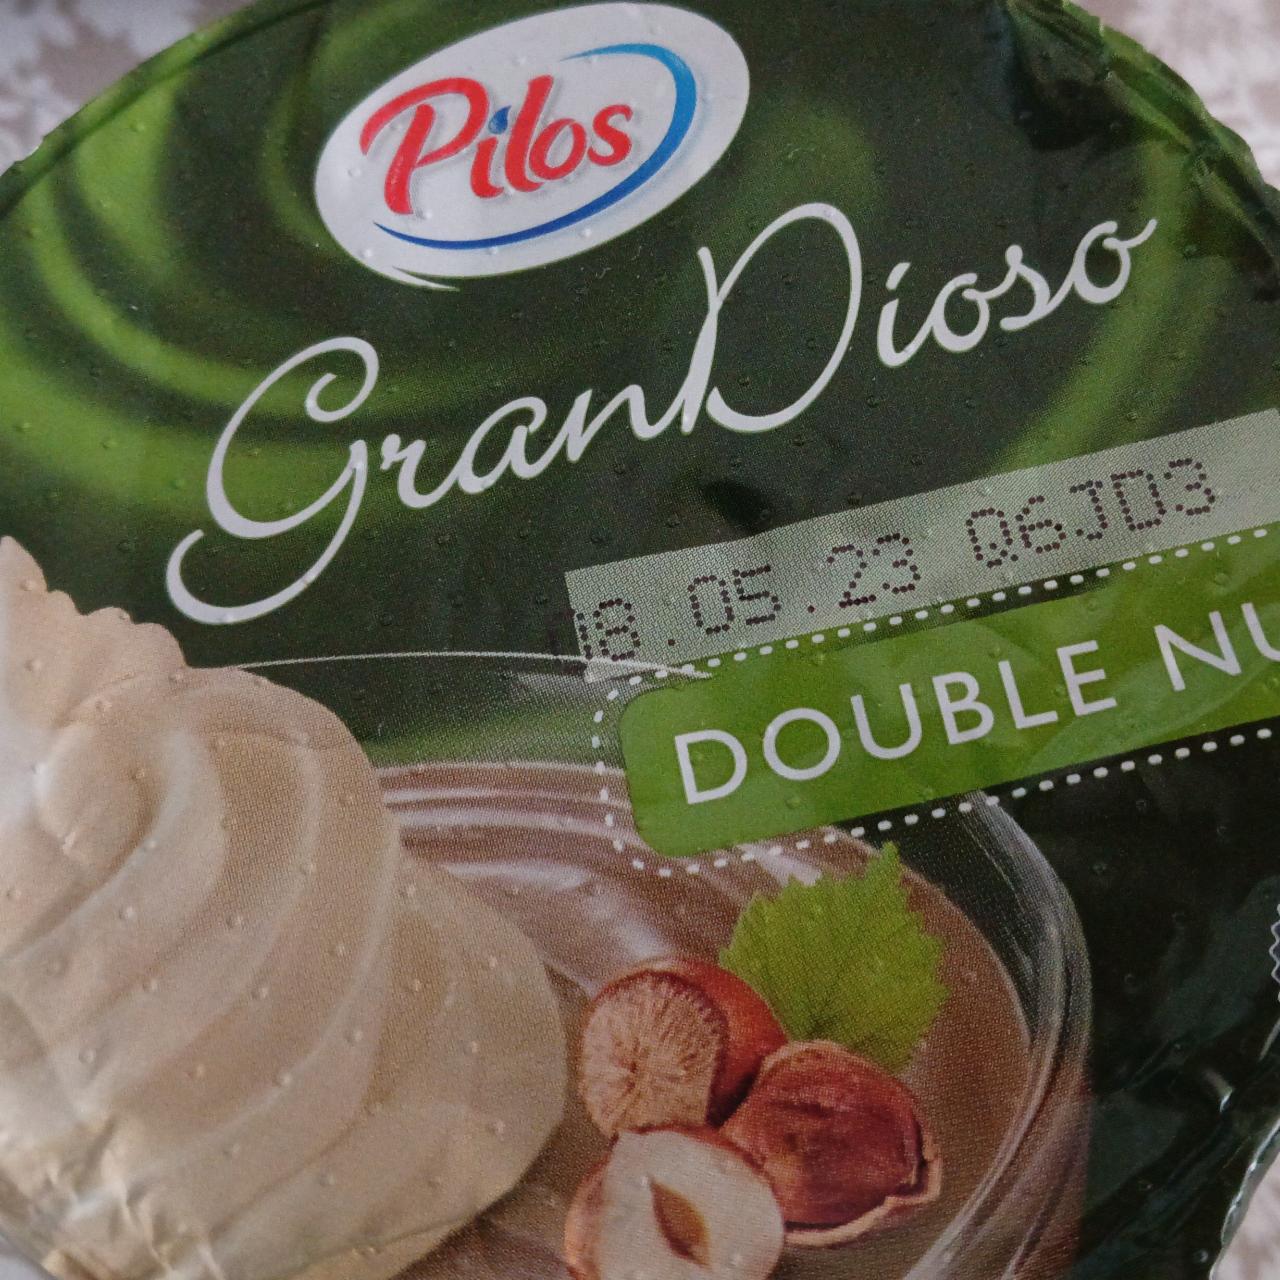 Zdjęcia - GranDioso double nut Pilos